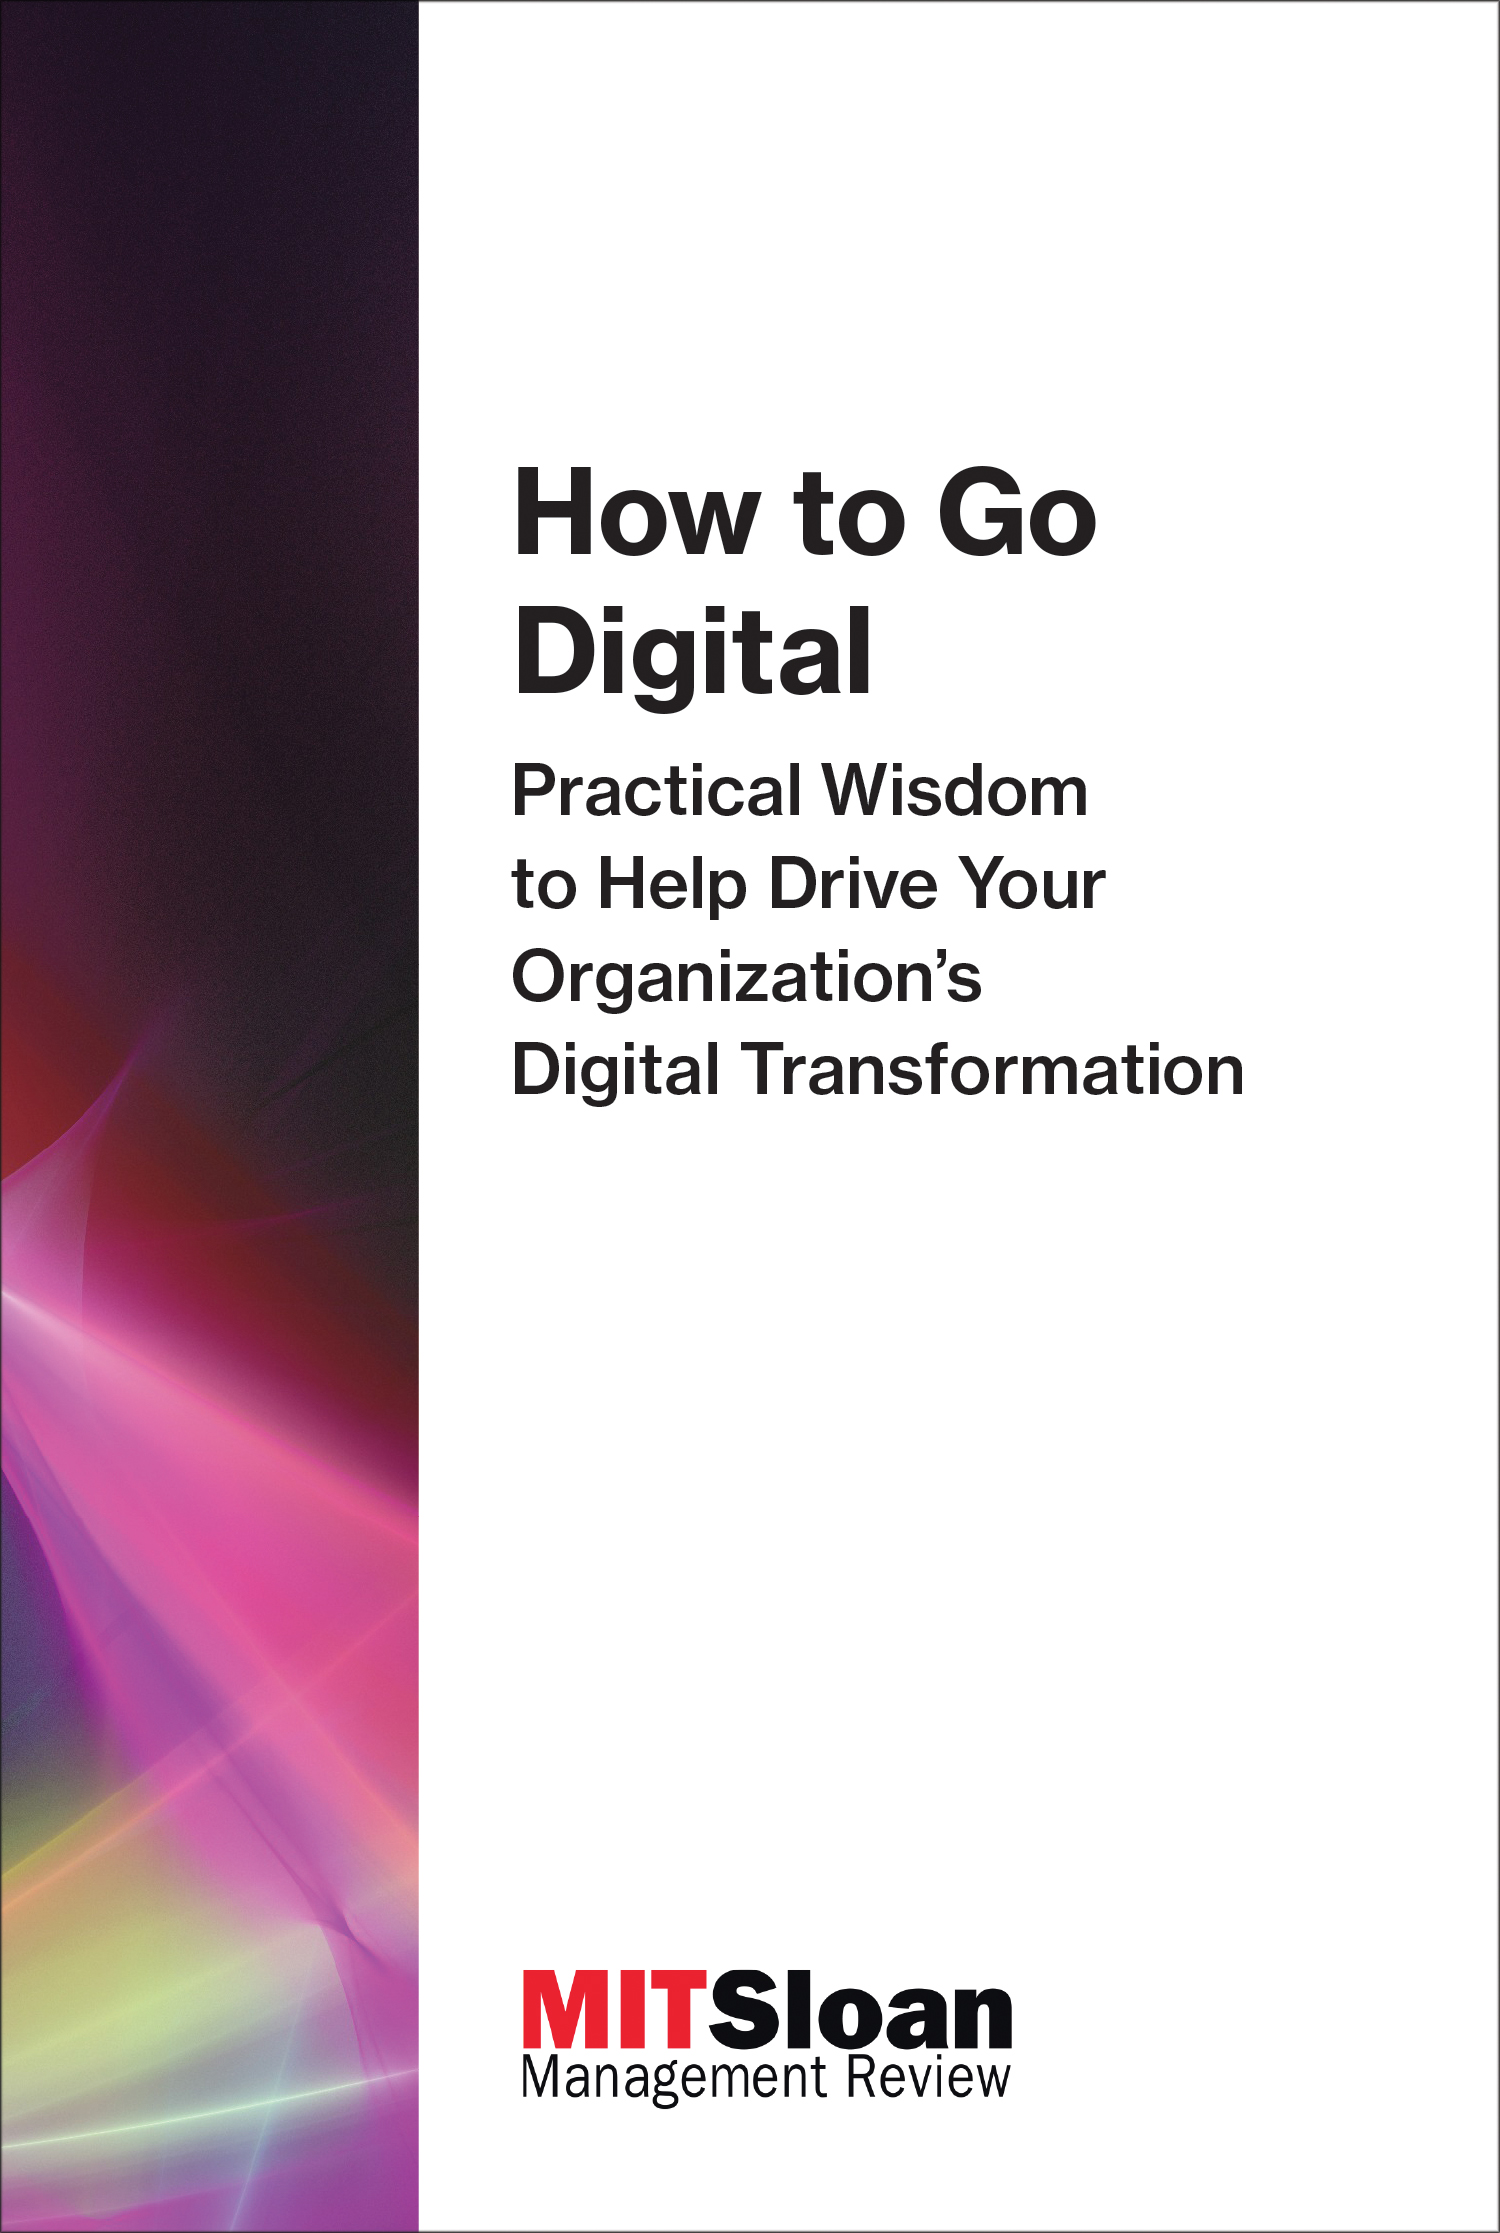 How to go digital